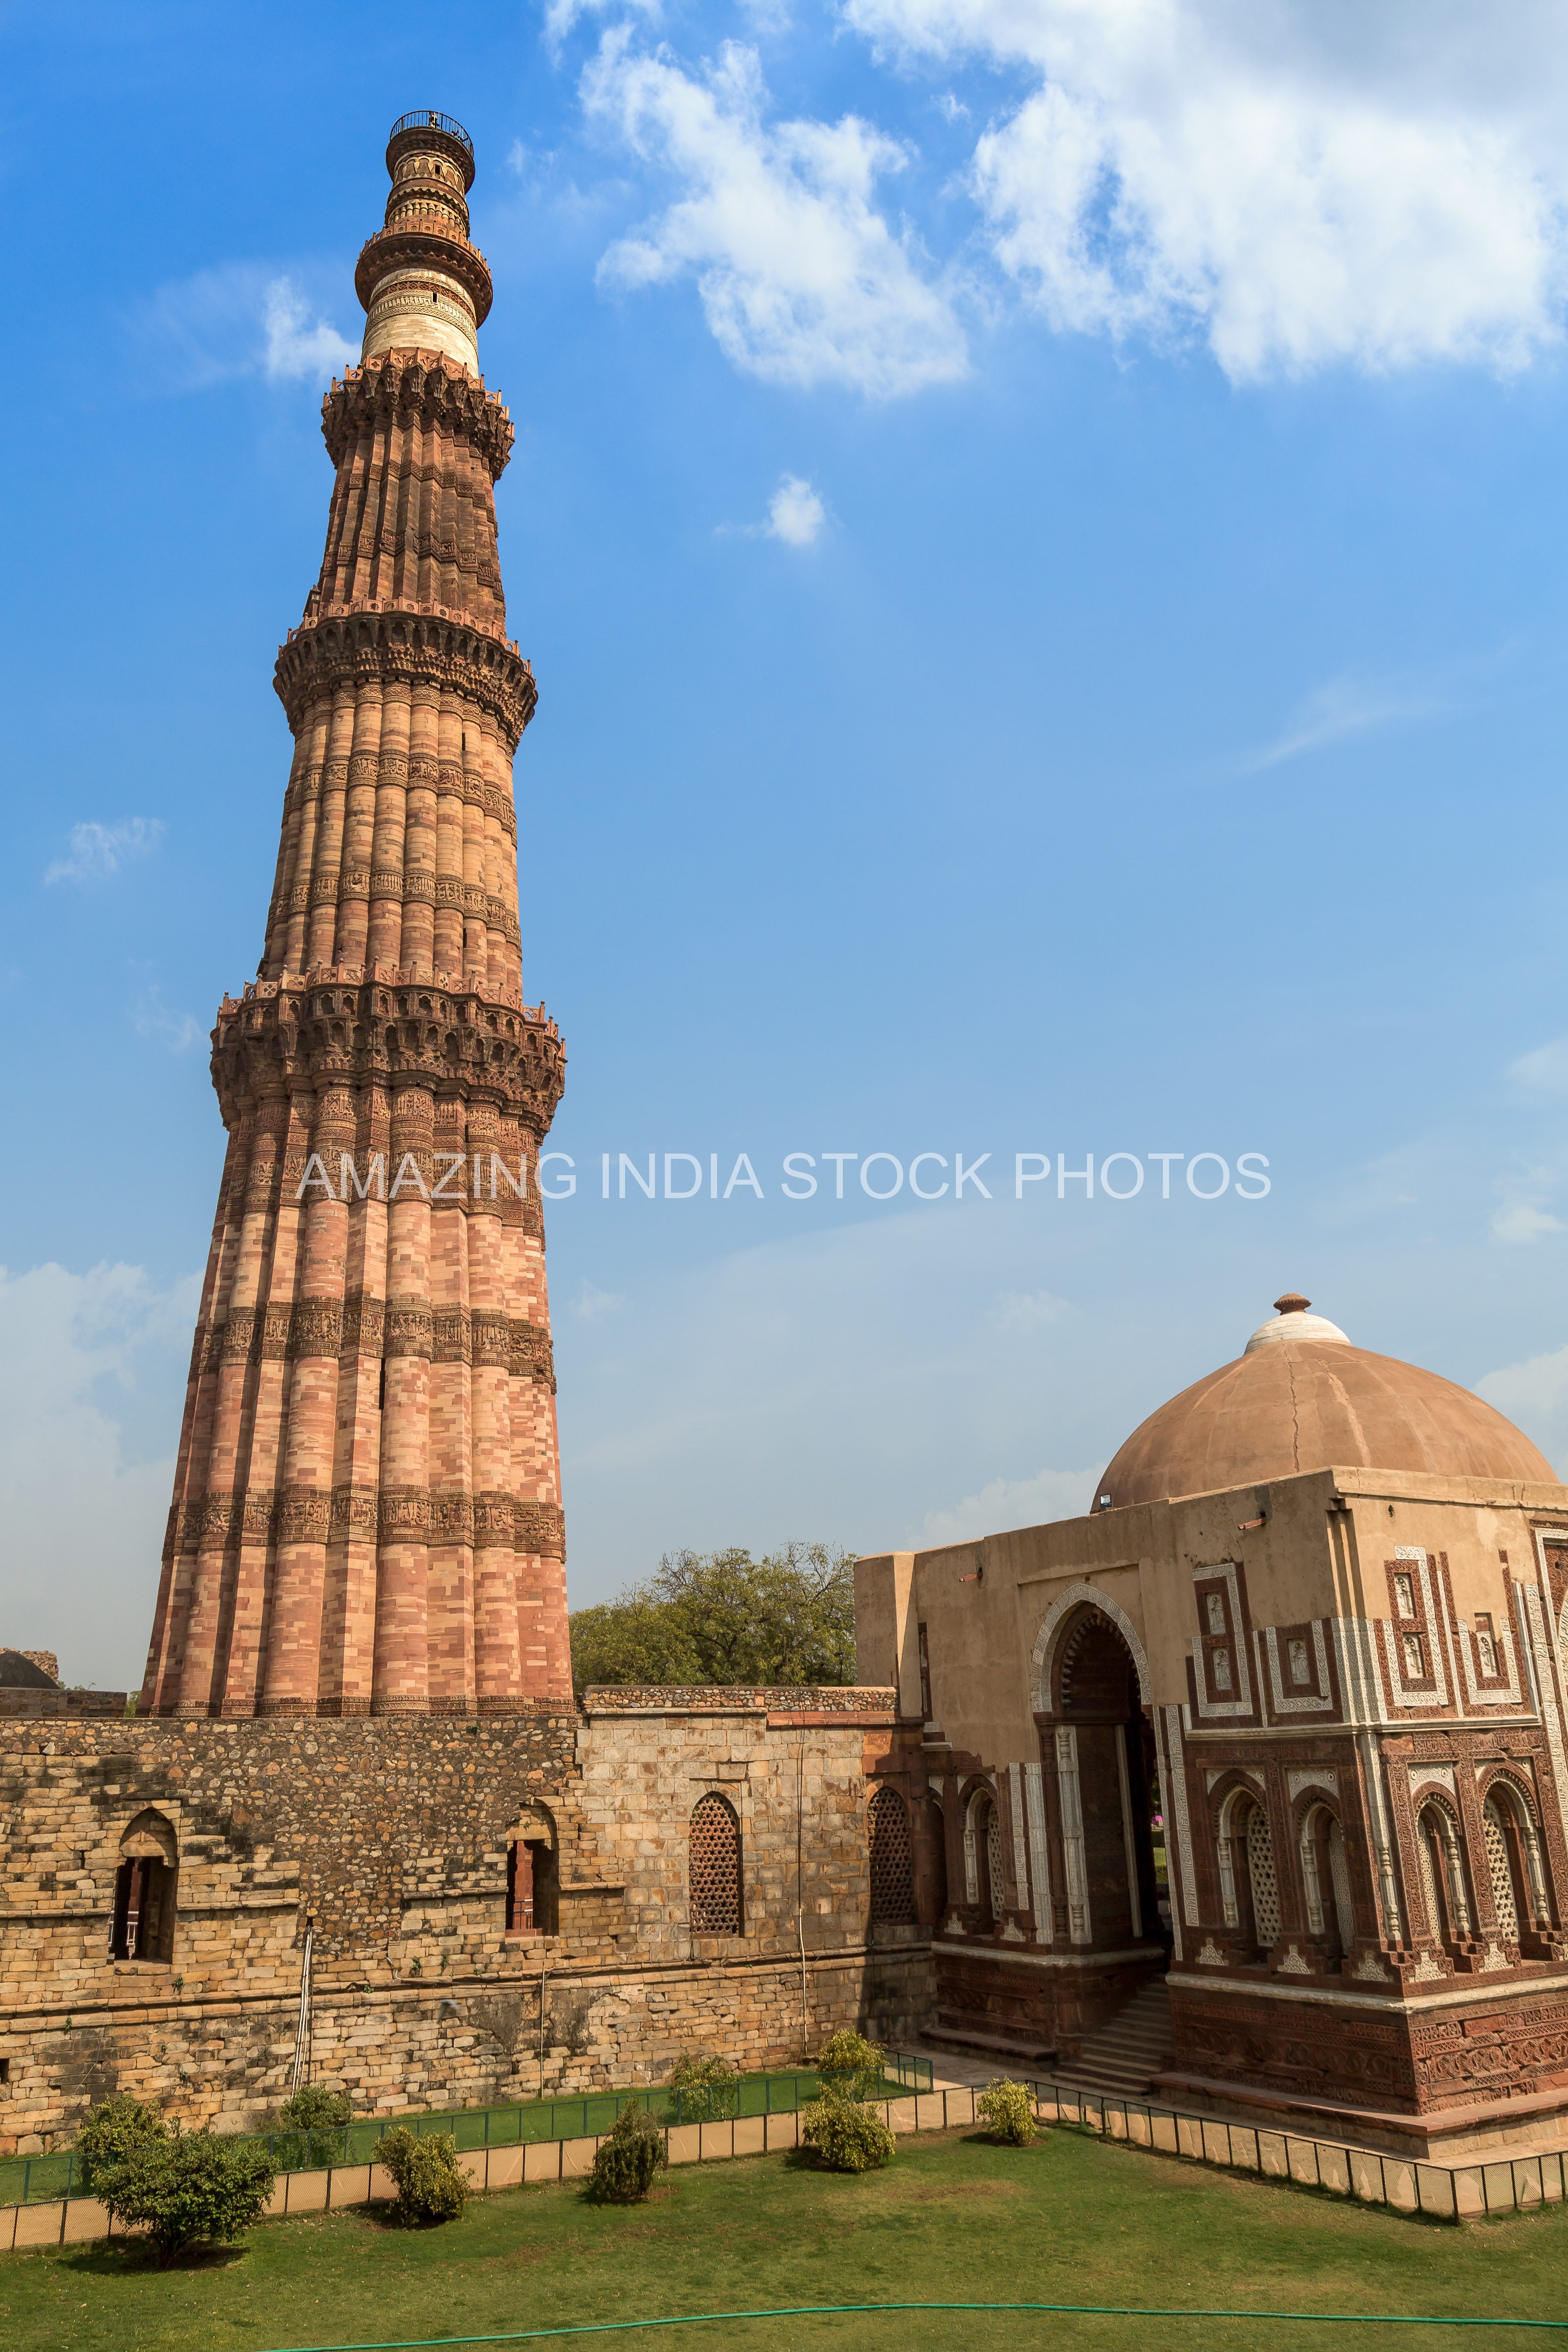 Qutub Minar Stock Photos in high quality - Amazing India Stock Photos